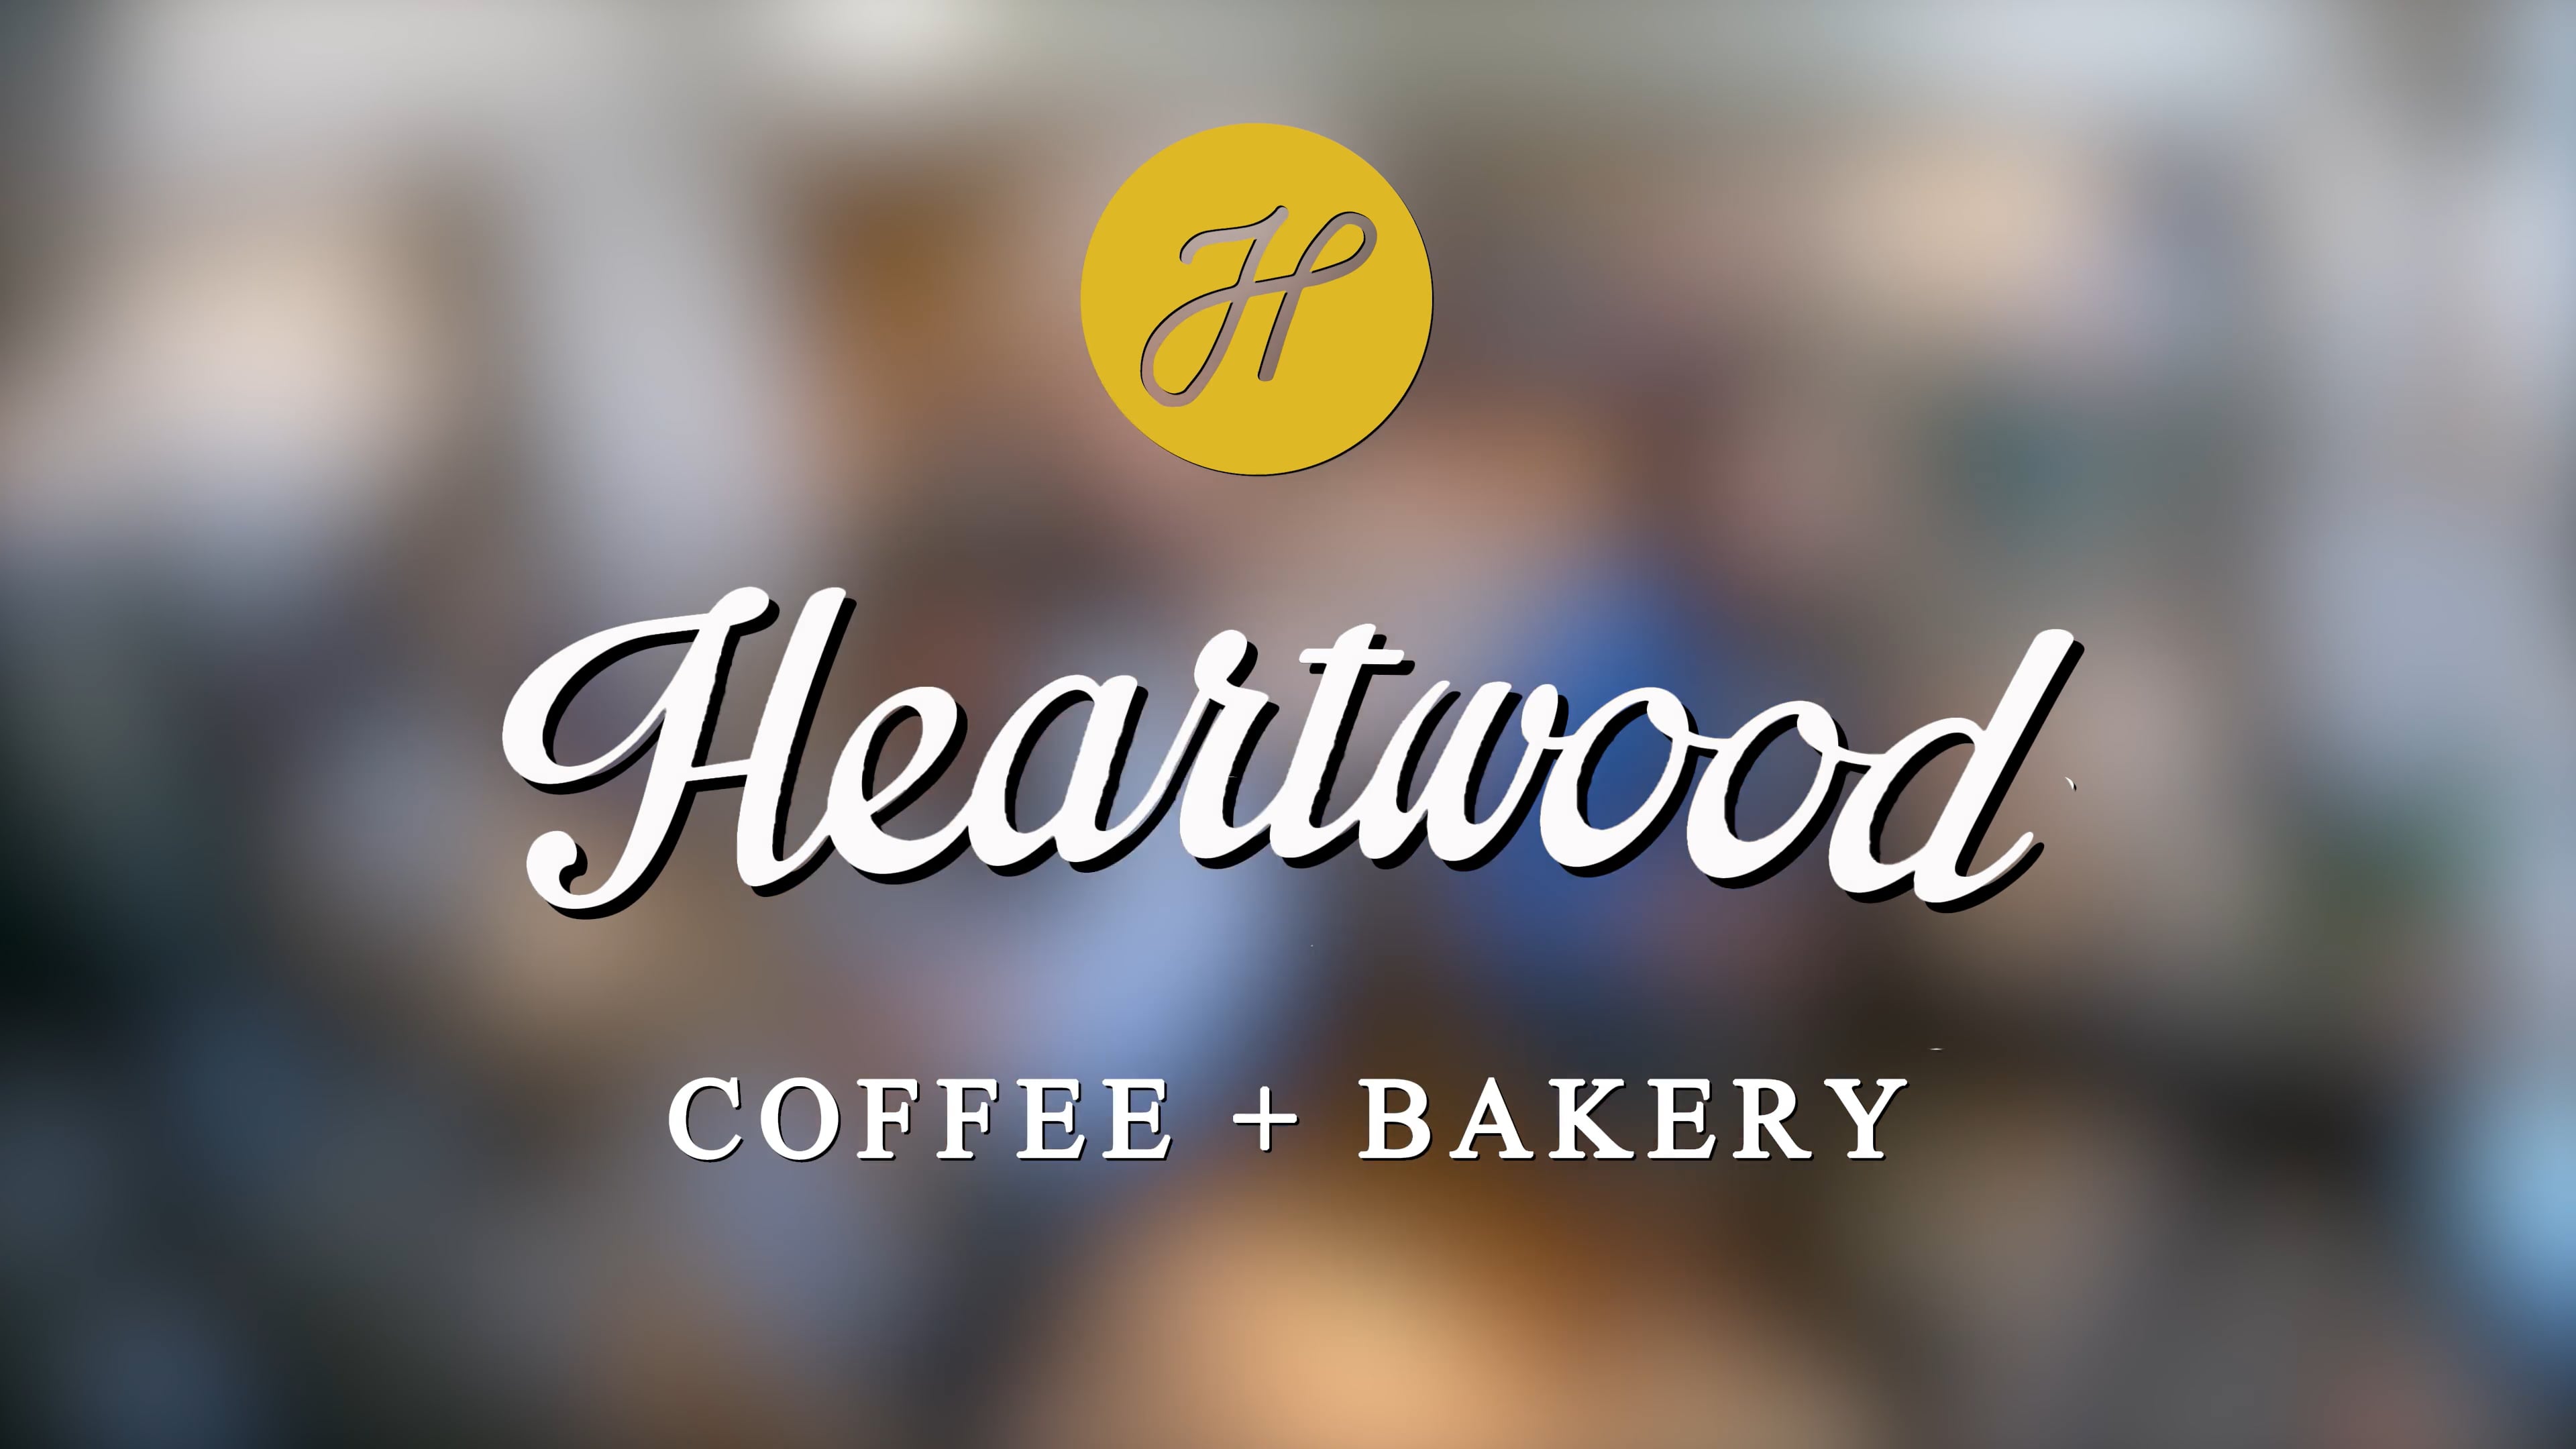 Heartwood Coffee + Bakery